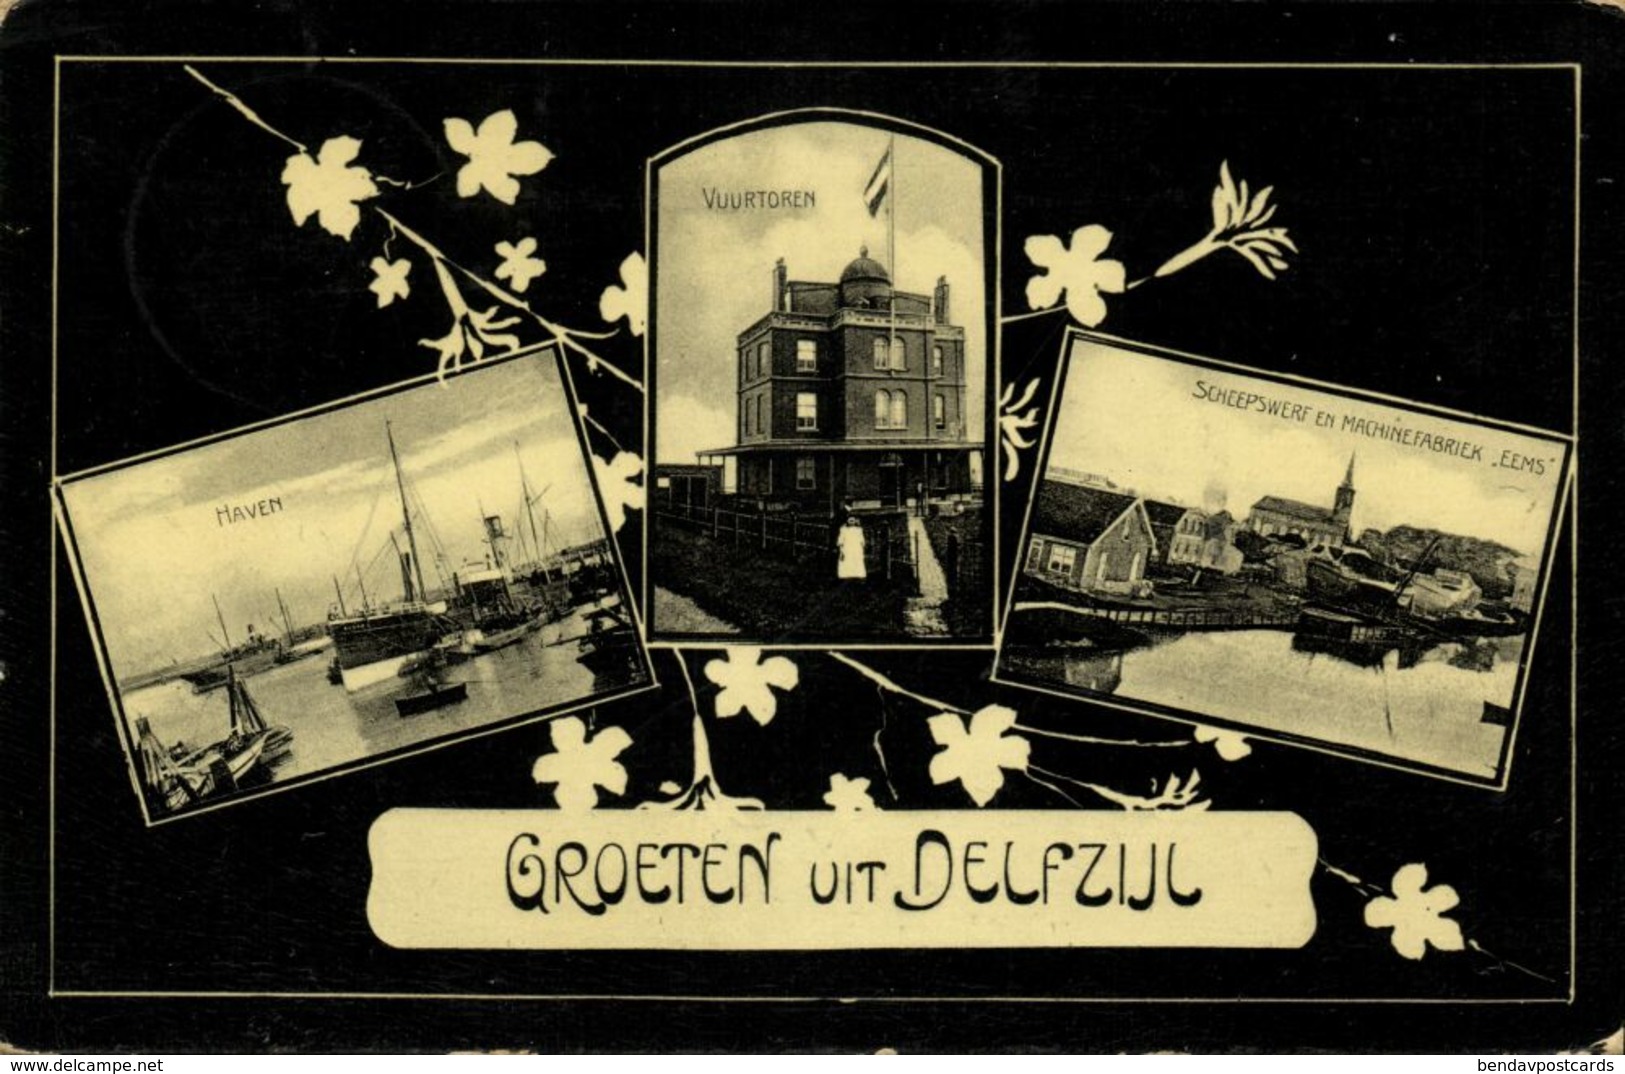 Nederland, DELFZIJL, Haven, Vuurtoren, Scheepswerf "Eems" (1910s) Ansichtkaart - Delfzijl